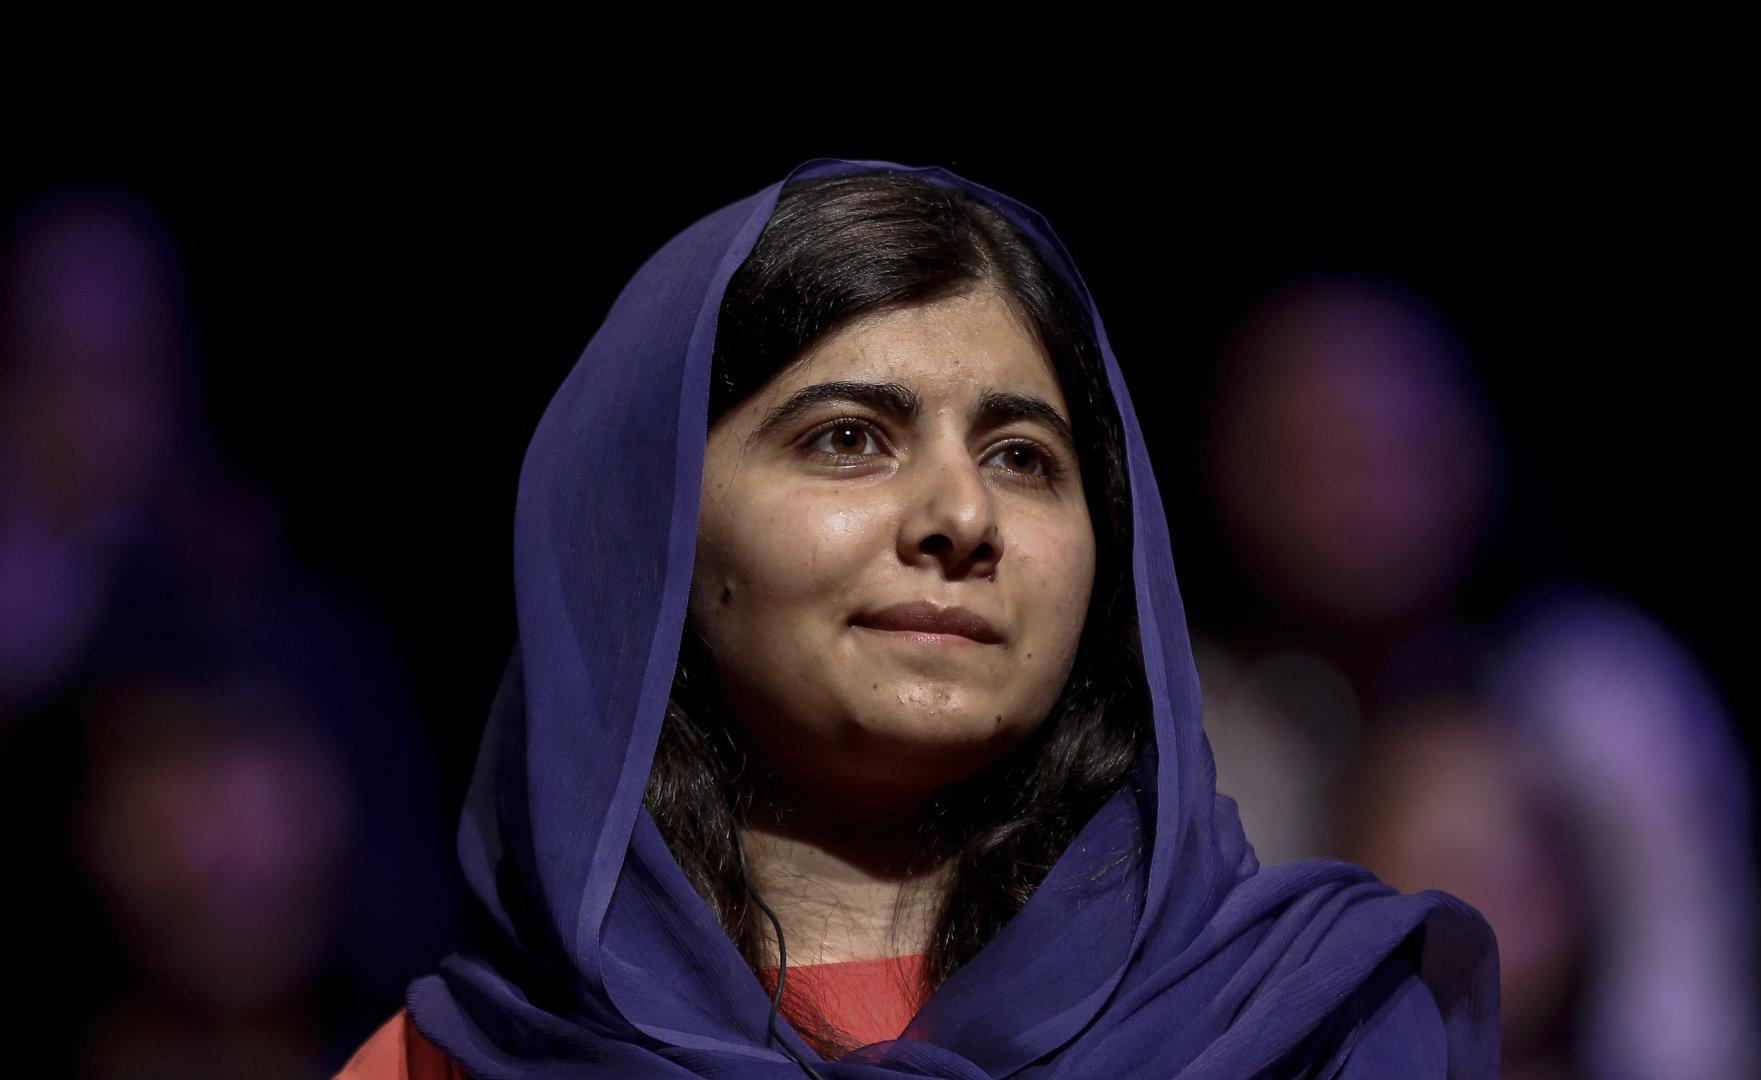 Friedensnobelpreisträgerin Malala Yousafzai hat geheiratet